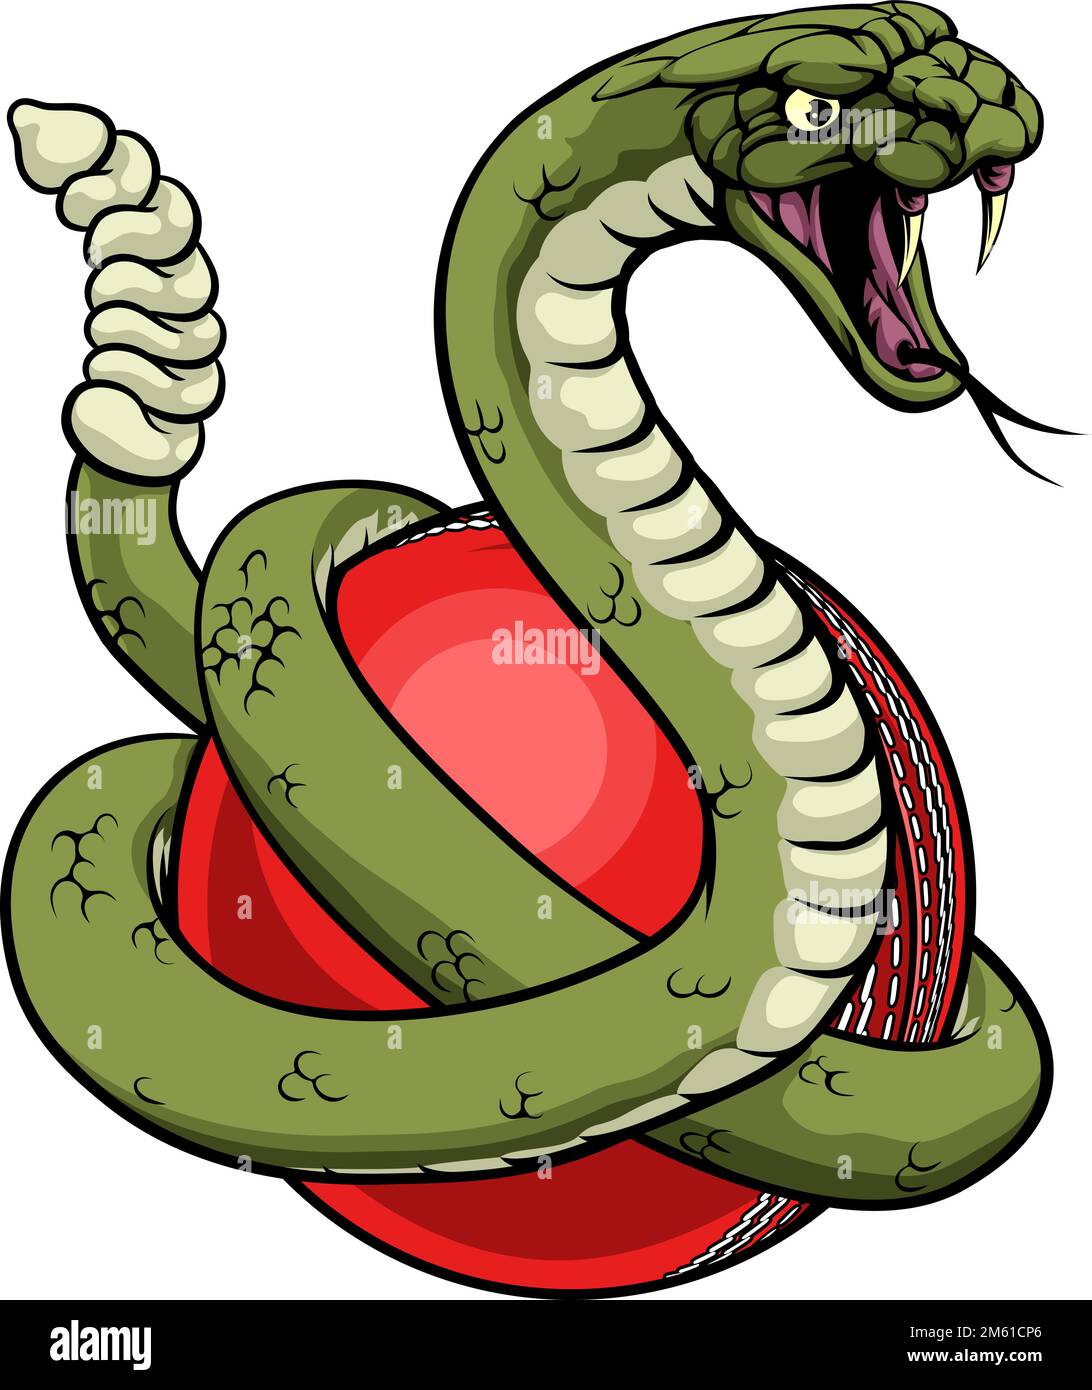 Rattlesnake Cricket Ball Animal Sports Team Mascot Stock Vector